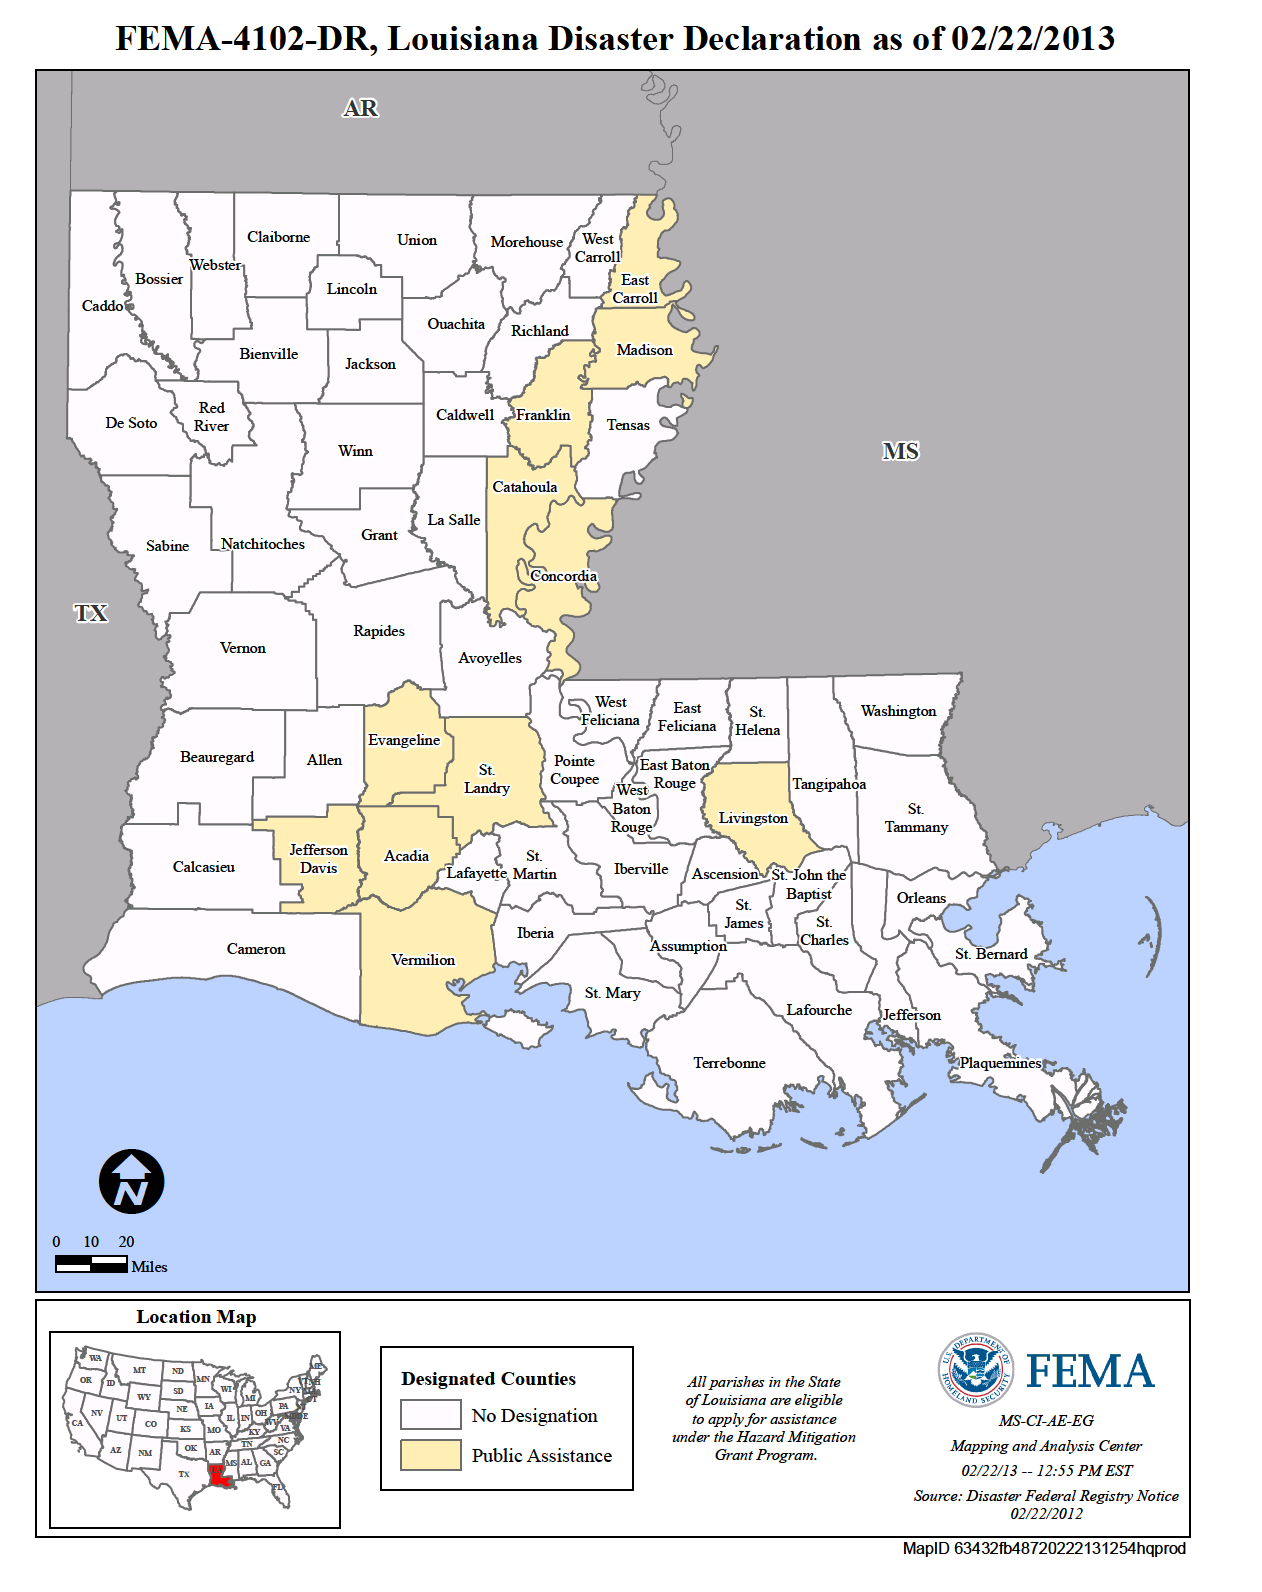 Louisiana Severe Storms And Flooding (DR4102LA) FEMA.gov